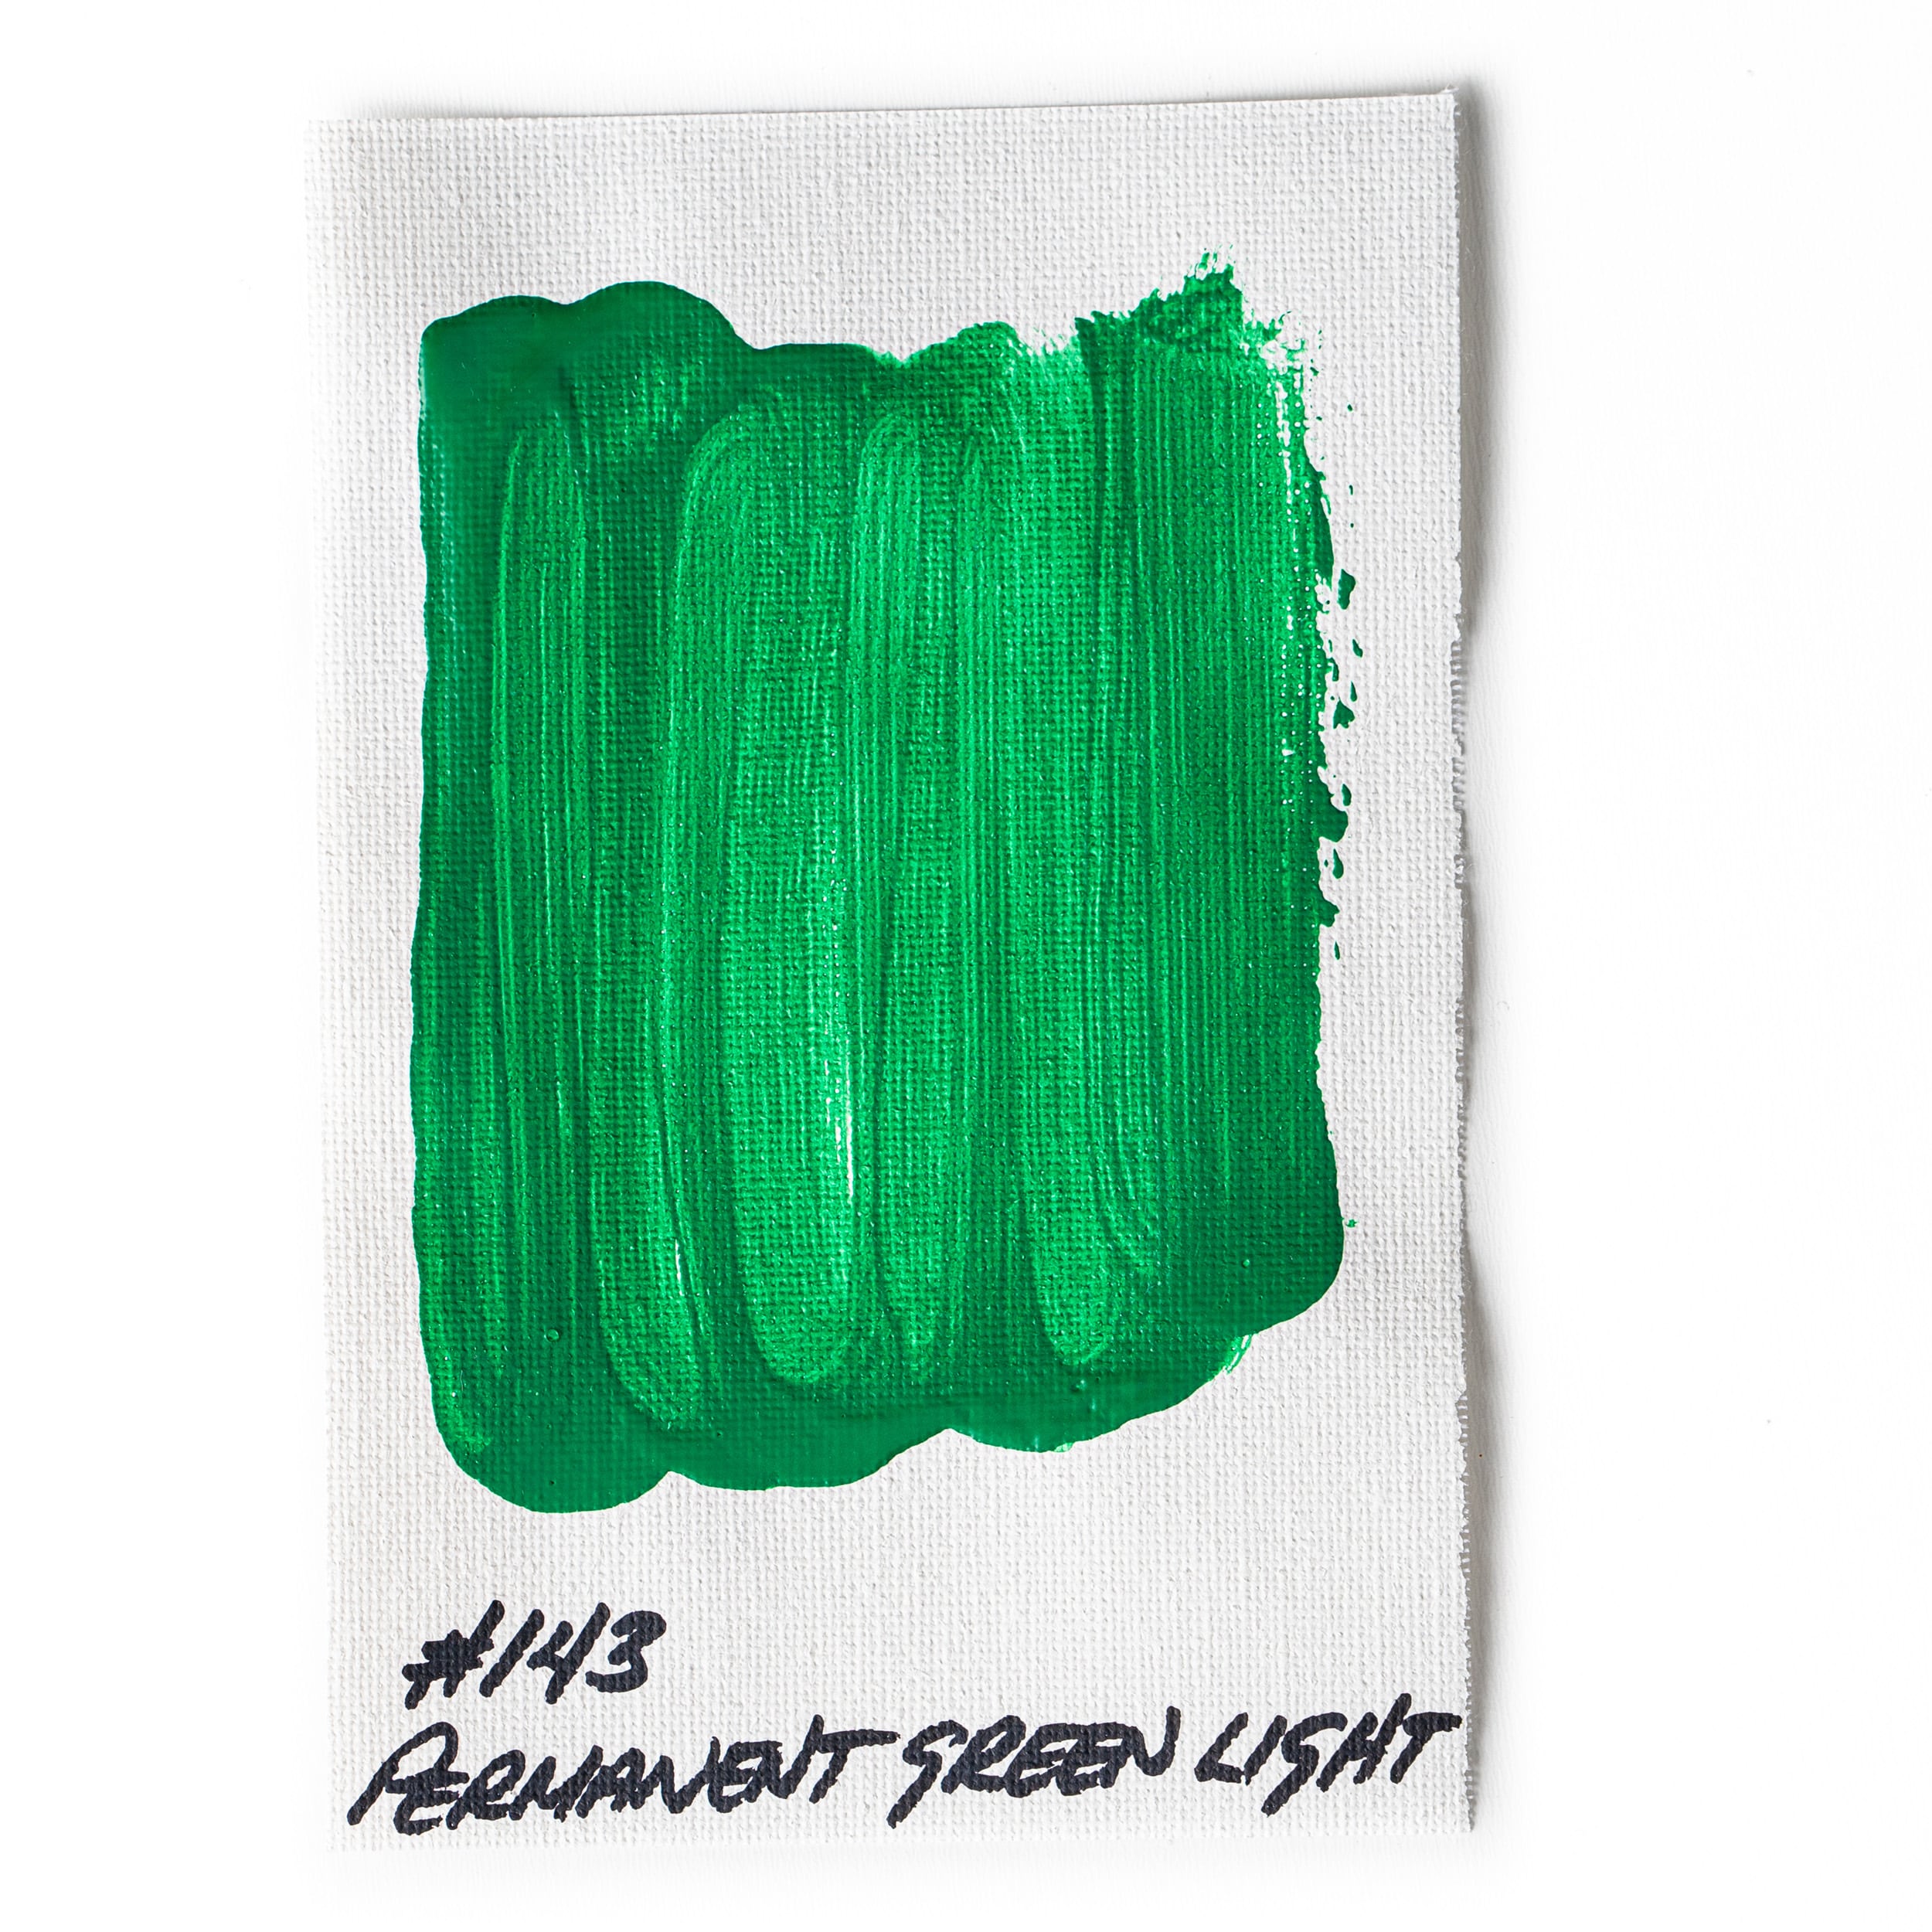 Buy #147 Quinacridone Magenta - Lightfastness:, - Transparent Online